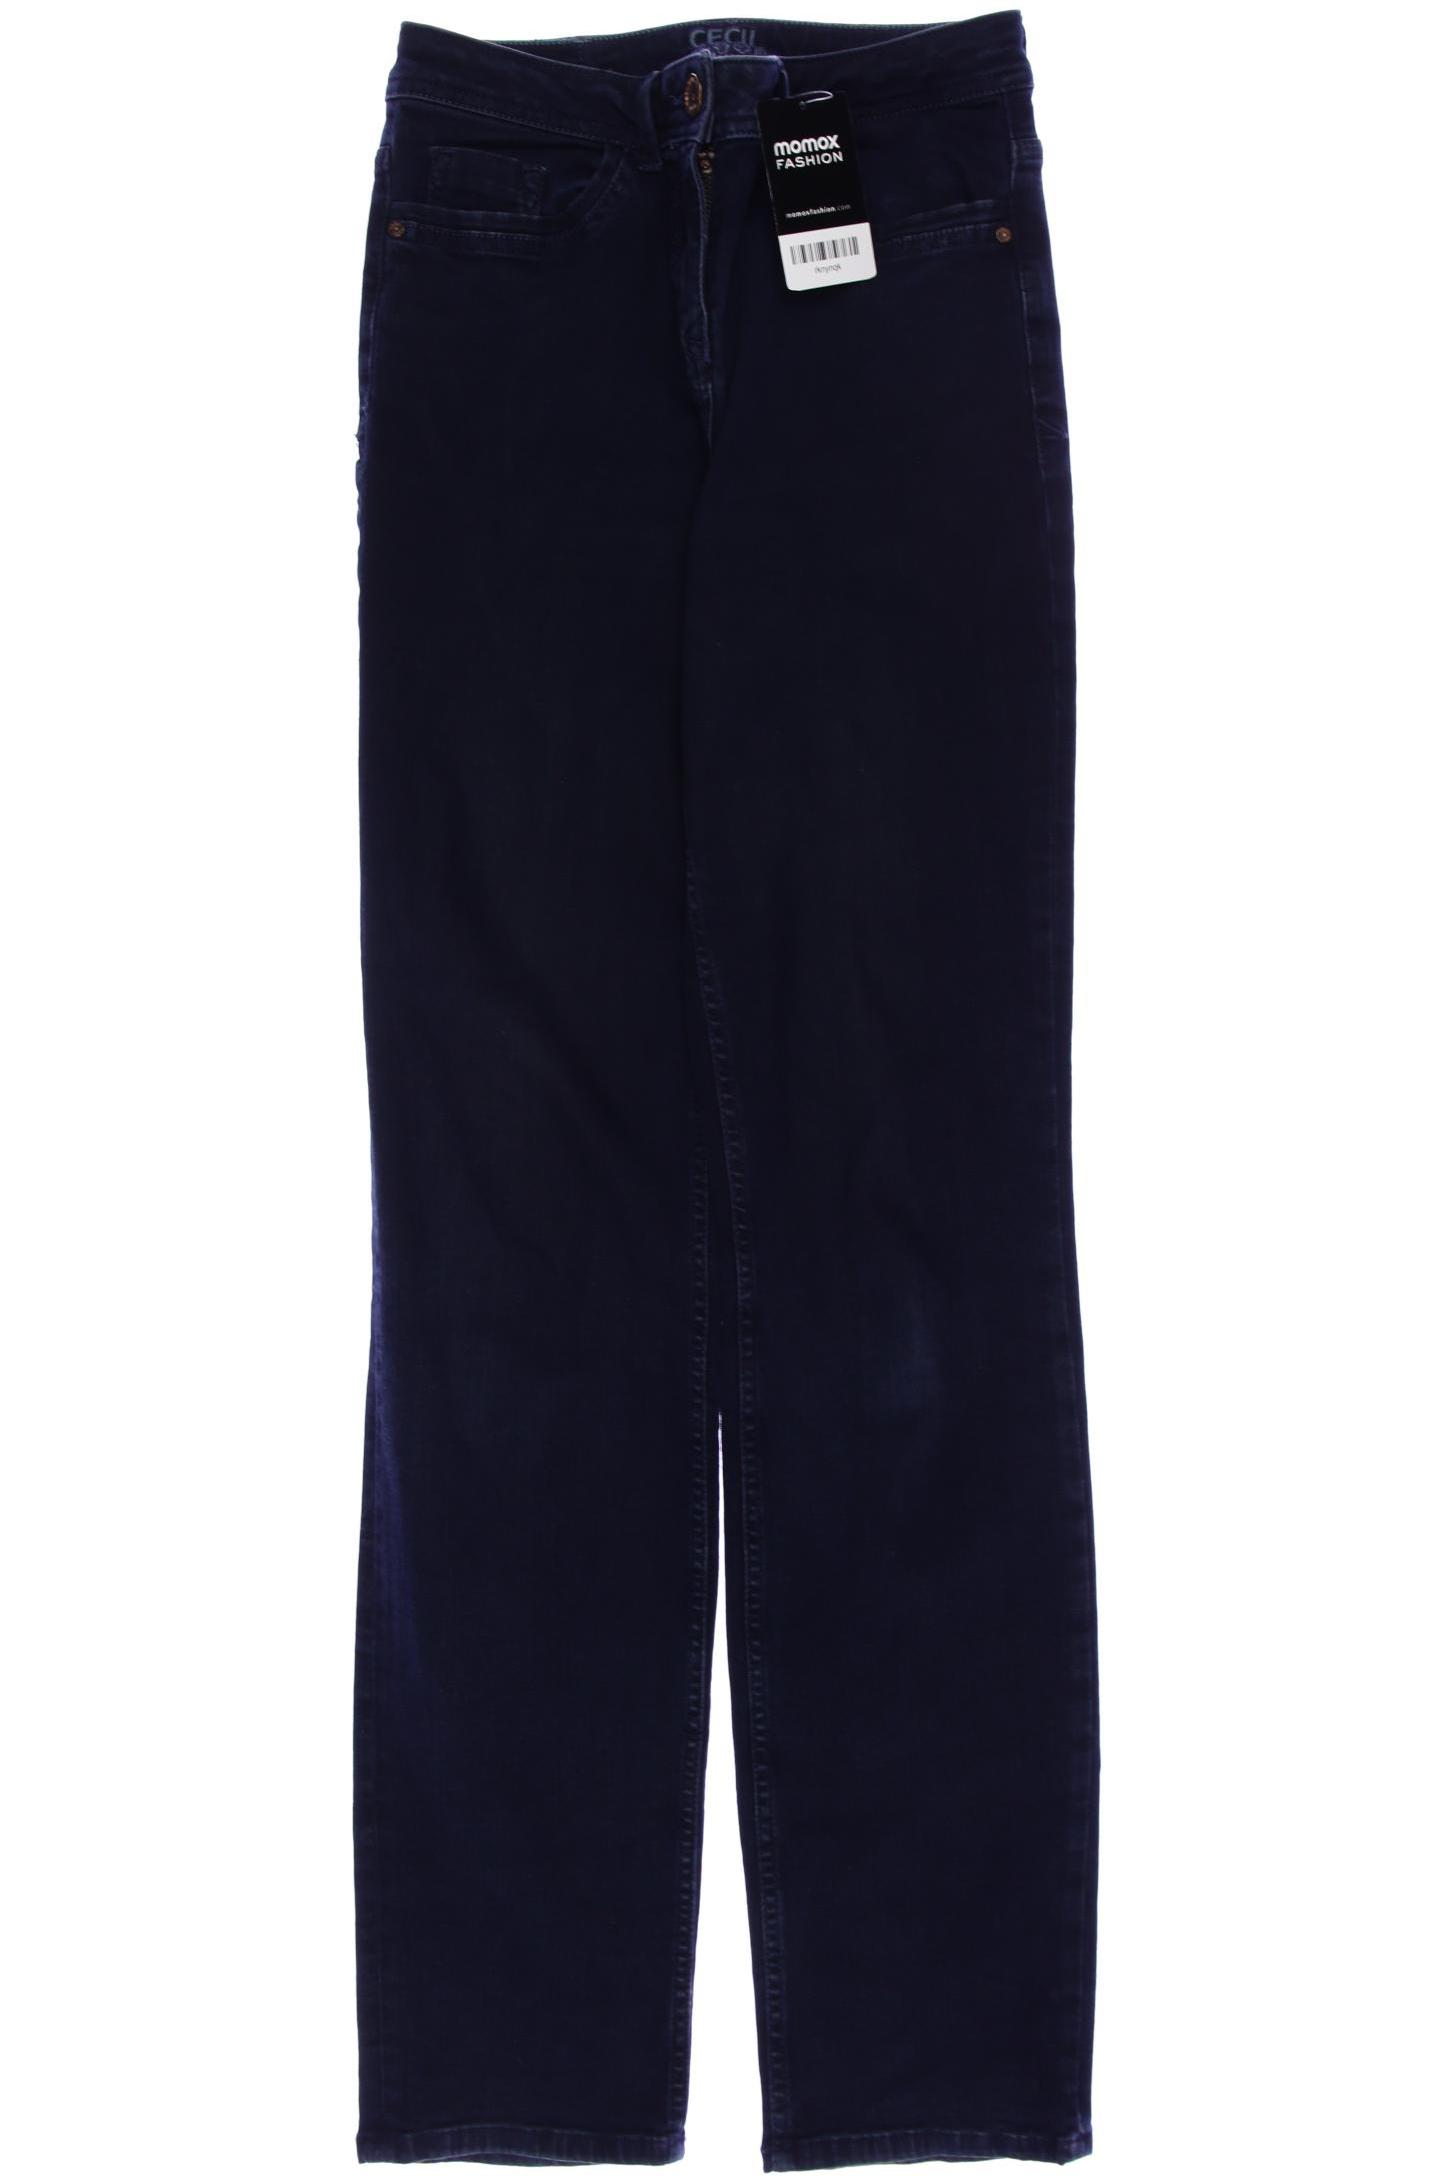 Cecil Damen Jeans, marineblau, Gr. 36 von cecil